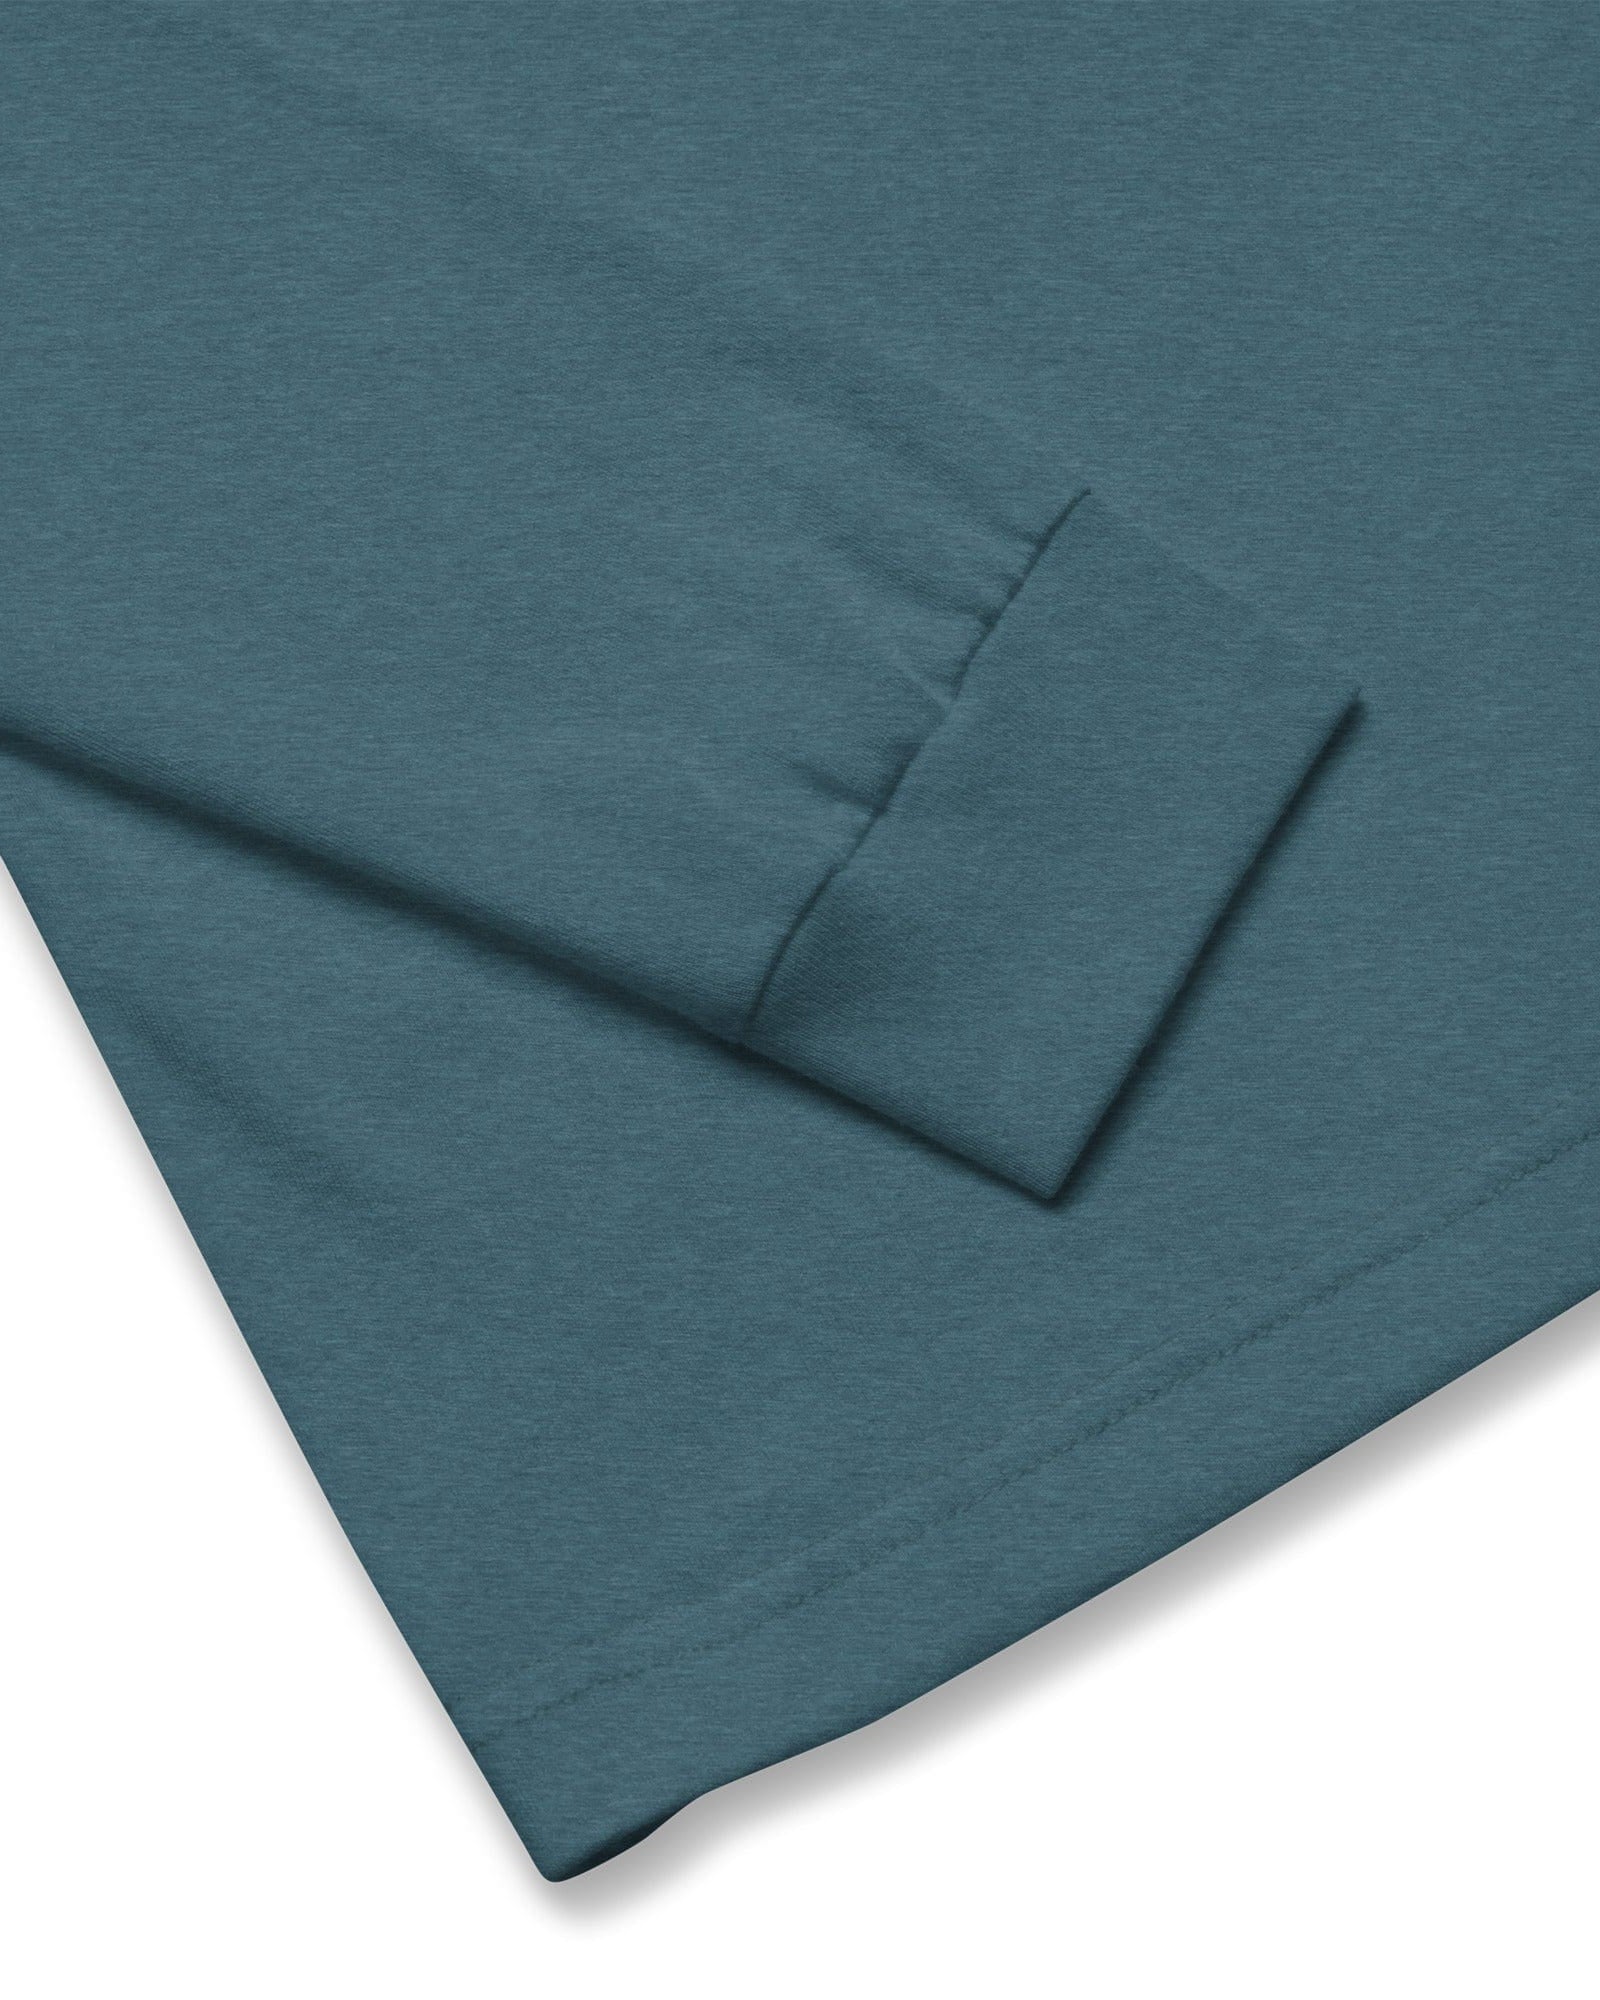 River Exe Long-Sleeve Shirt | Exeter Shop long sleeve shirts Jolly & Goode